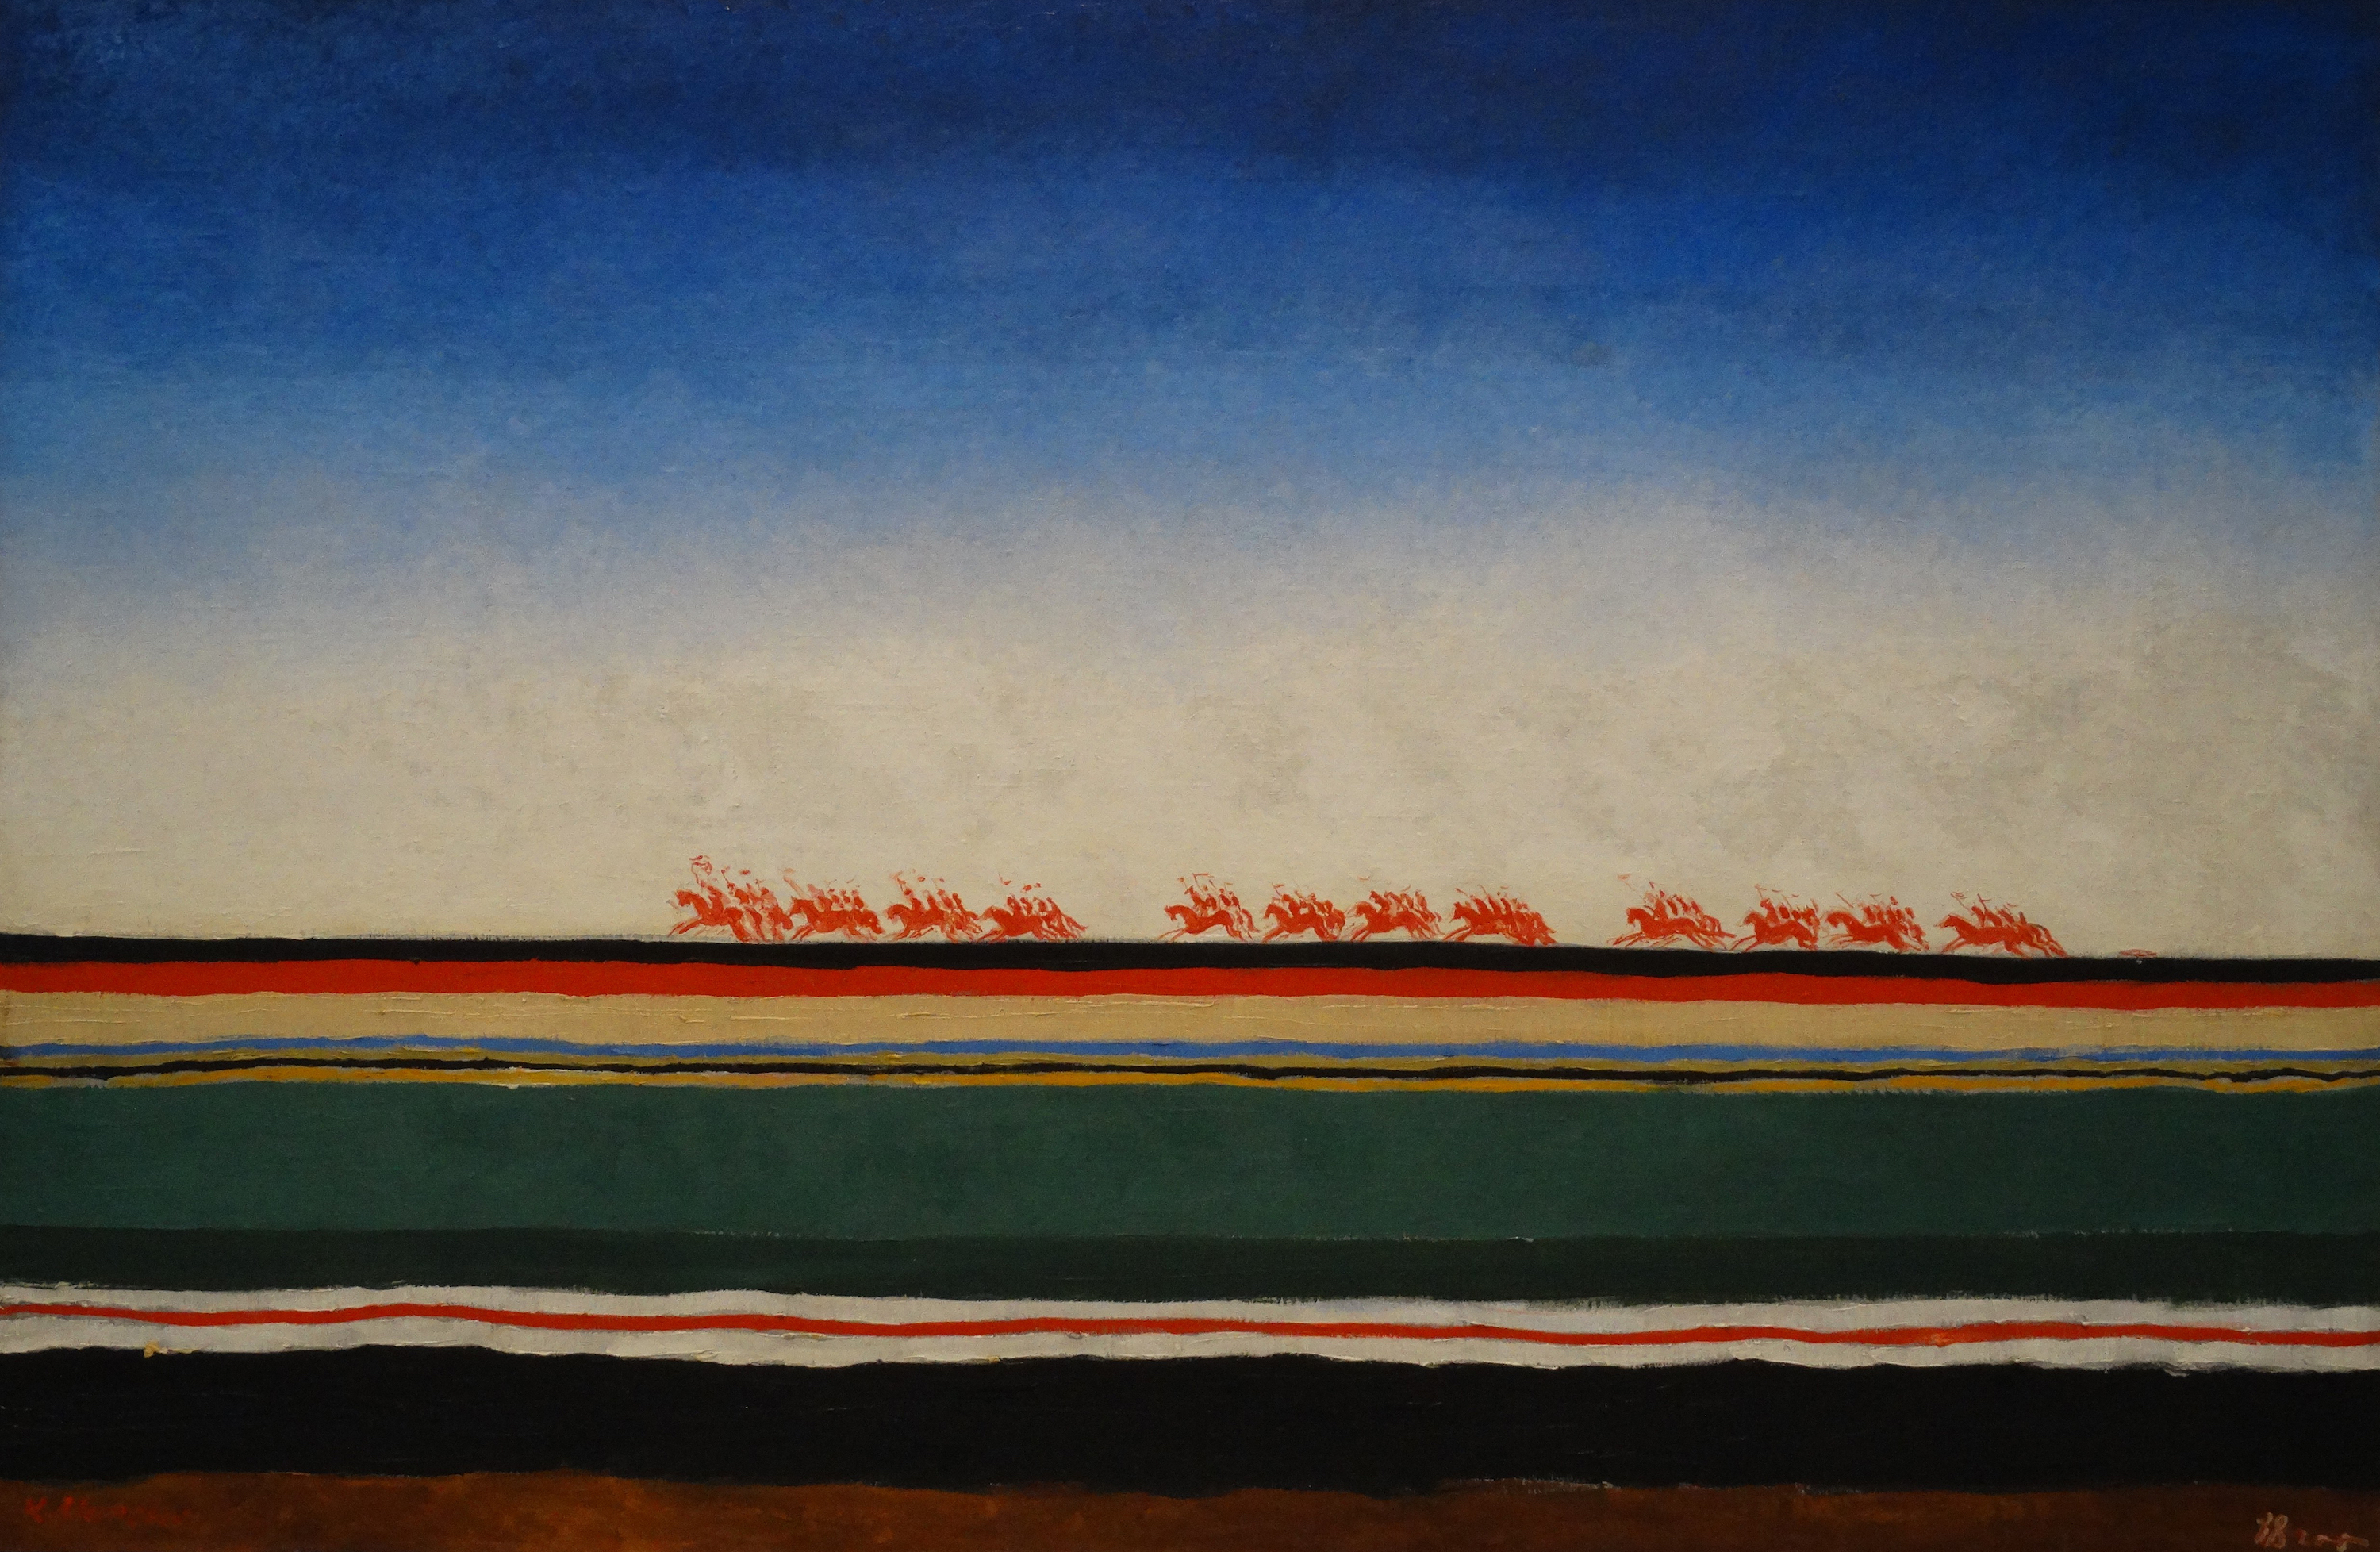 سوار نظام سرخ by Kazimir Malevich - تقریبا ۱۹۳۲ - ۹۱×۱۴۰ سانتی متر 